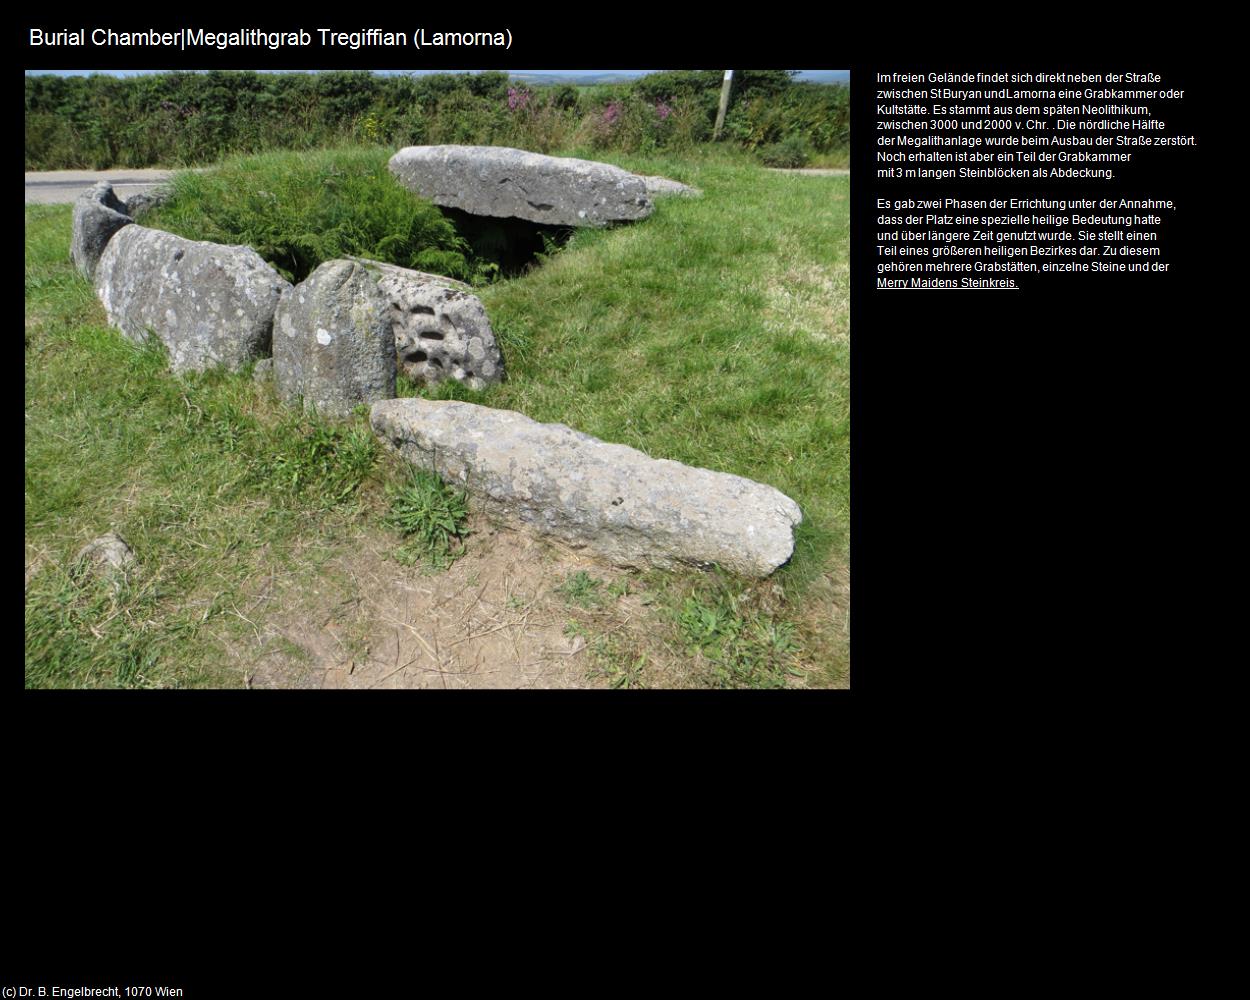 Megalithgrab Tregiffian  (Lamorna, England) in Kulturatlas-ENGLAND und WALES(c)B.Engelbrecht